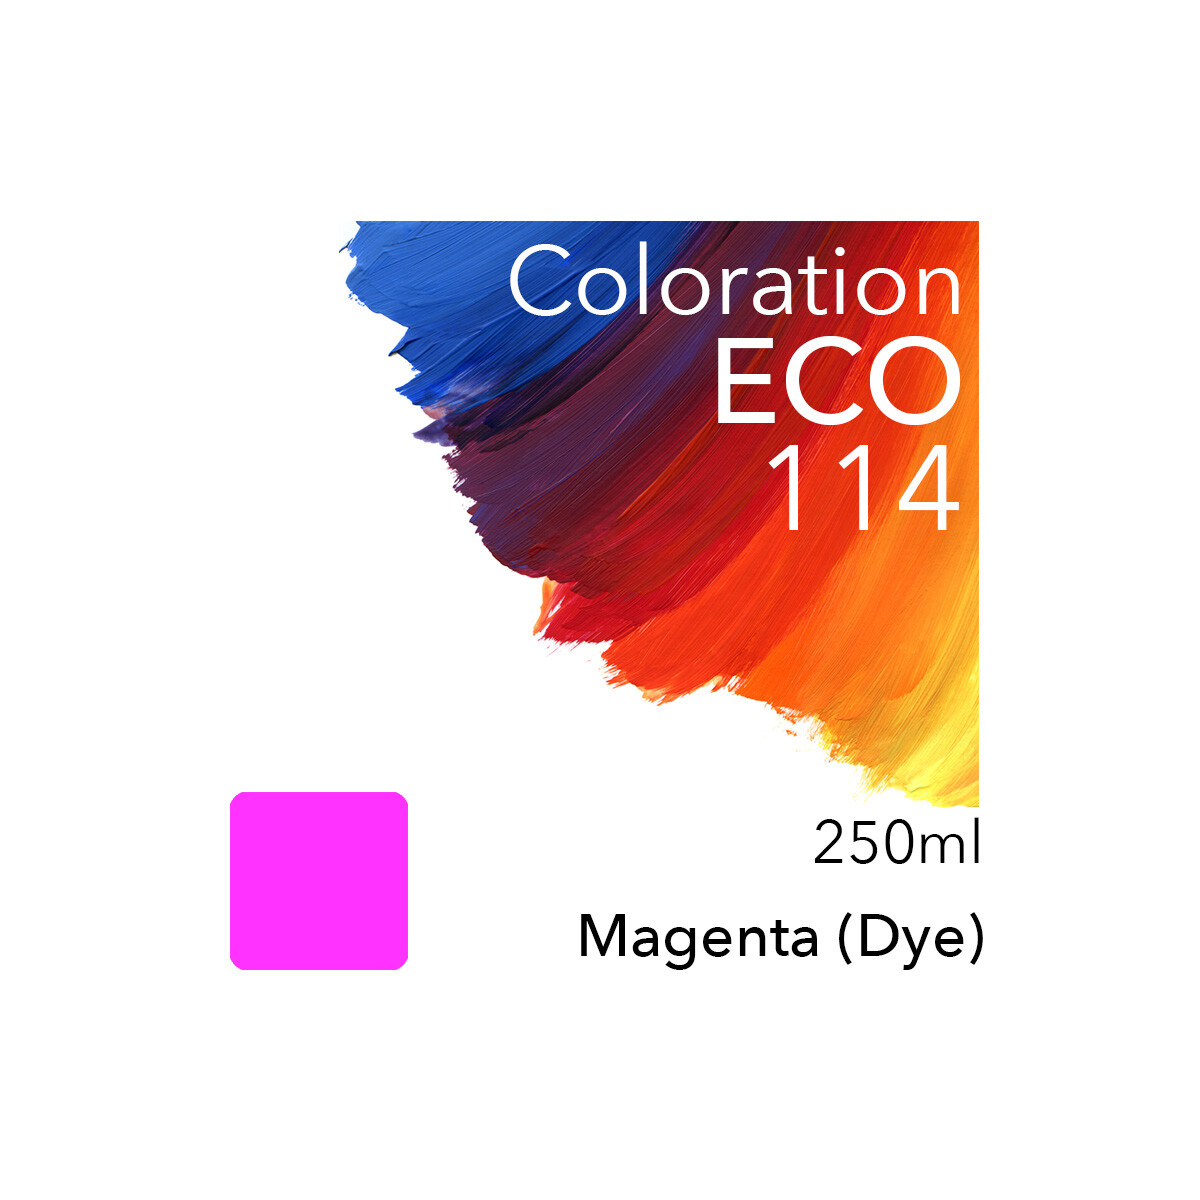 Coloration ECO kompatibel zu Epson 114 M (Magenta) 250ml